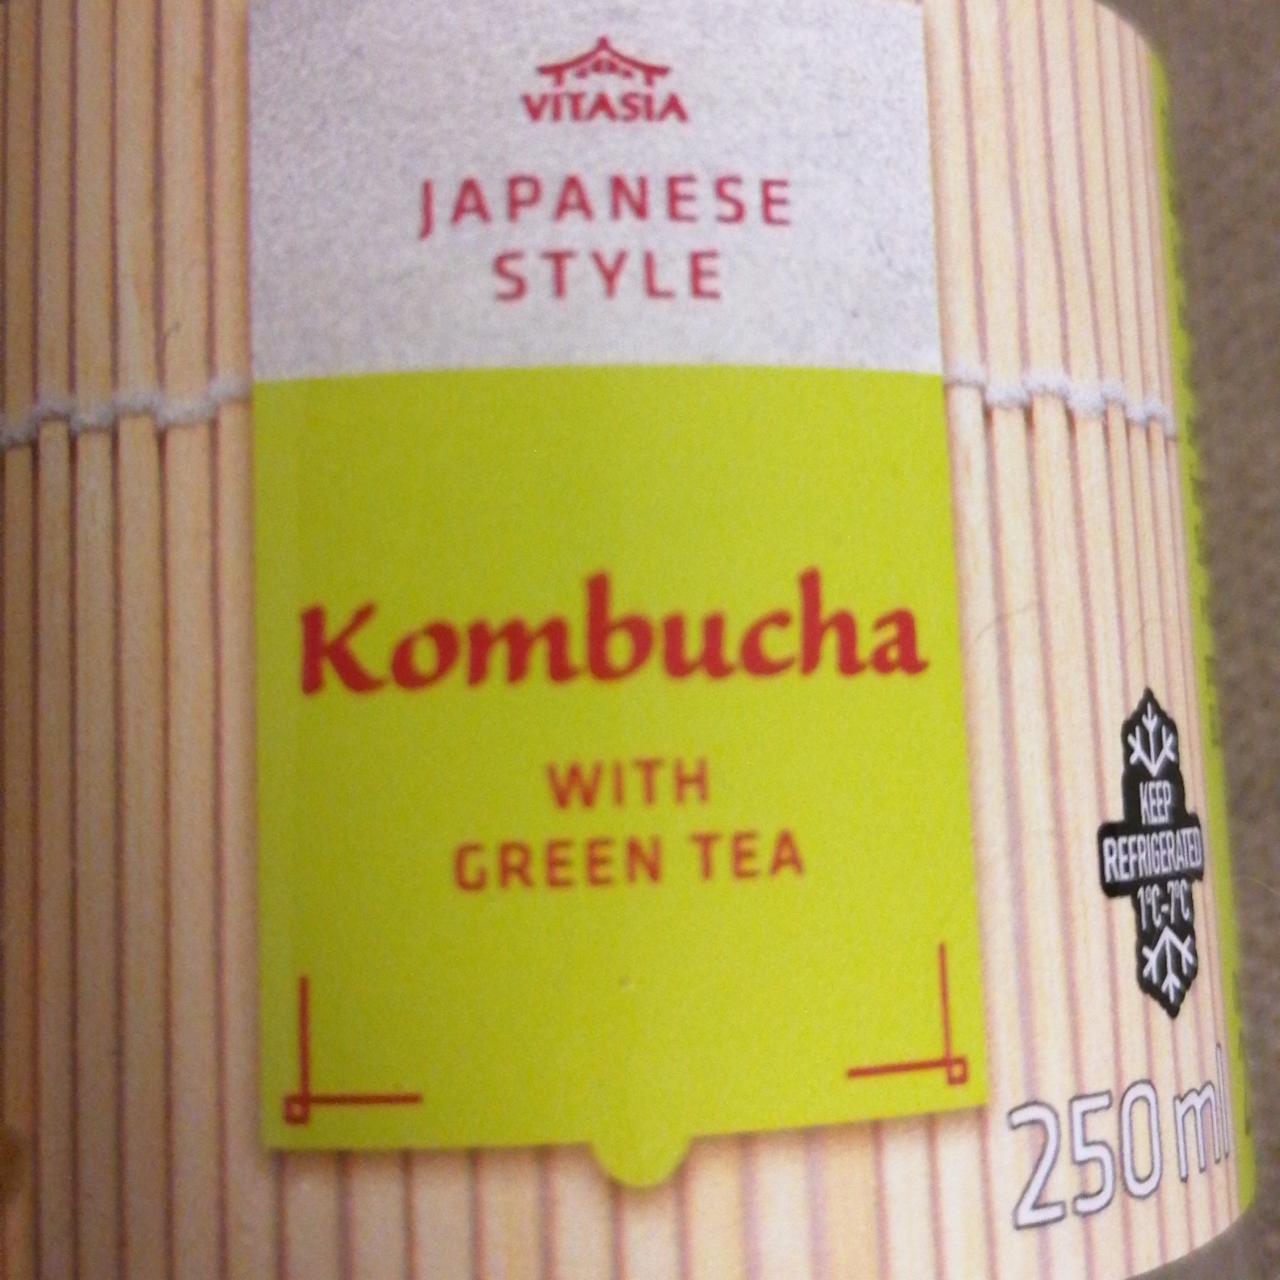 Fotografie - Japanese Style Kombucha with green tea Vitasia